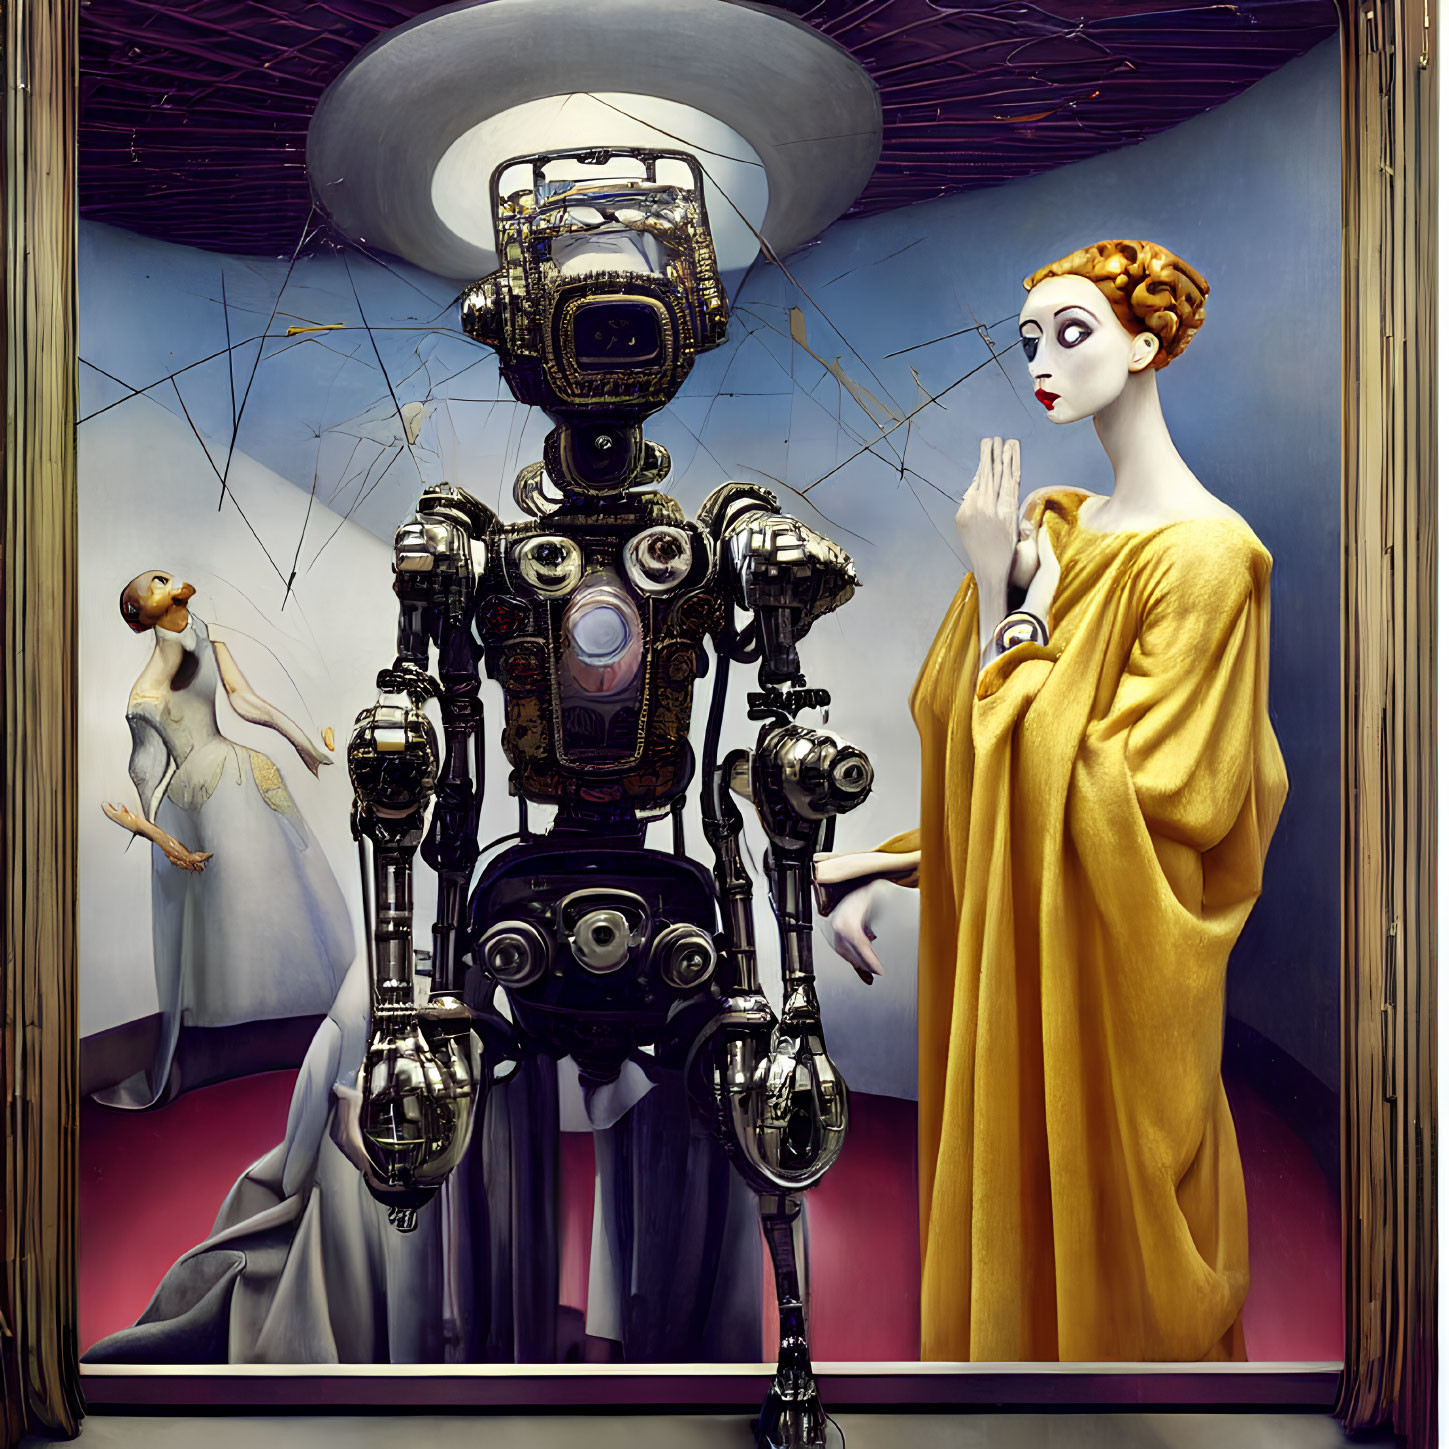 Vintage robot and mannequins in surreal display against vibrant backdrop